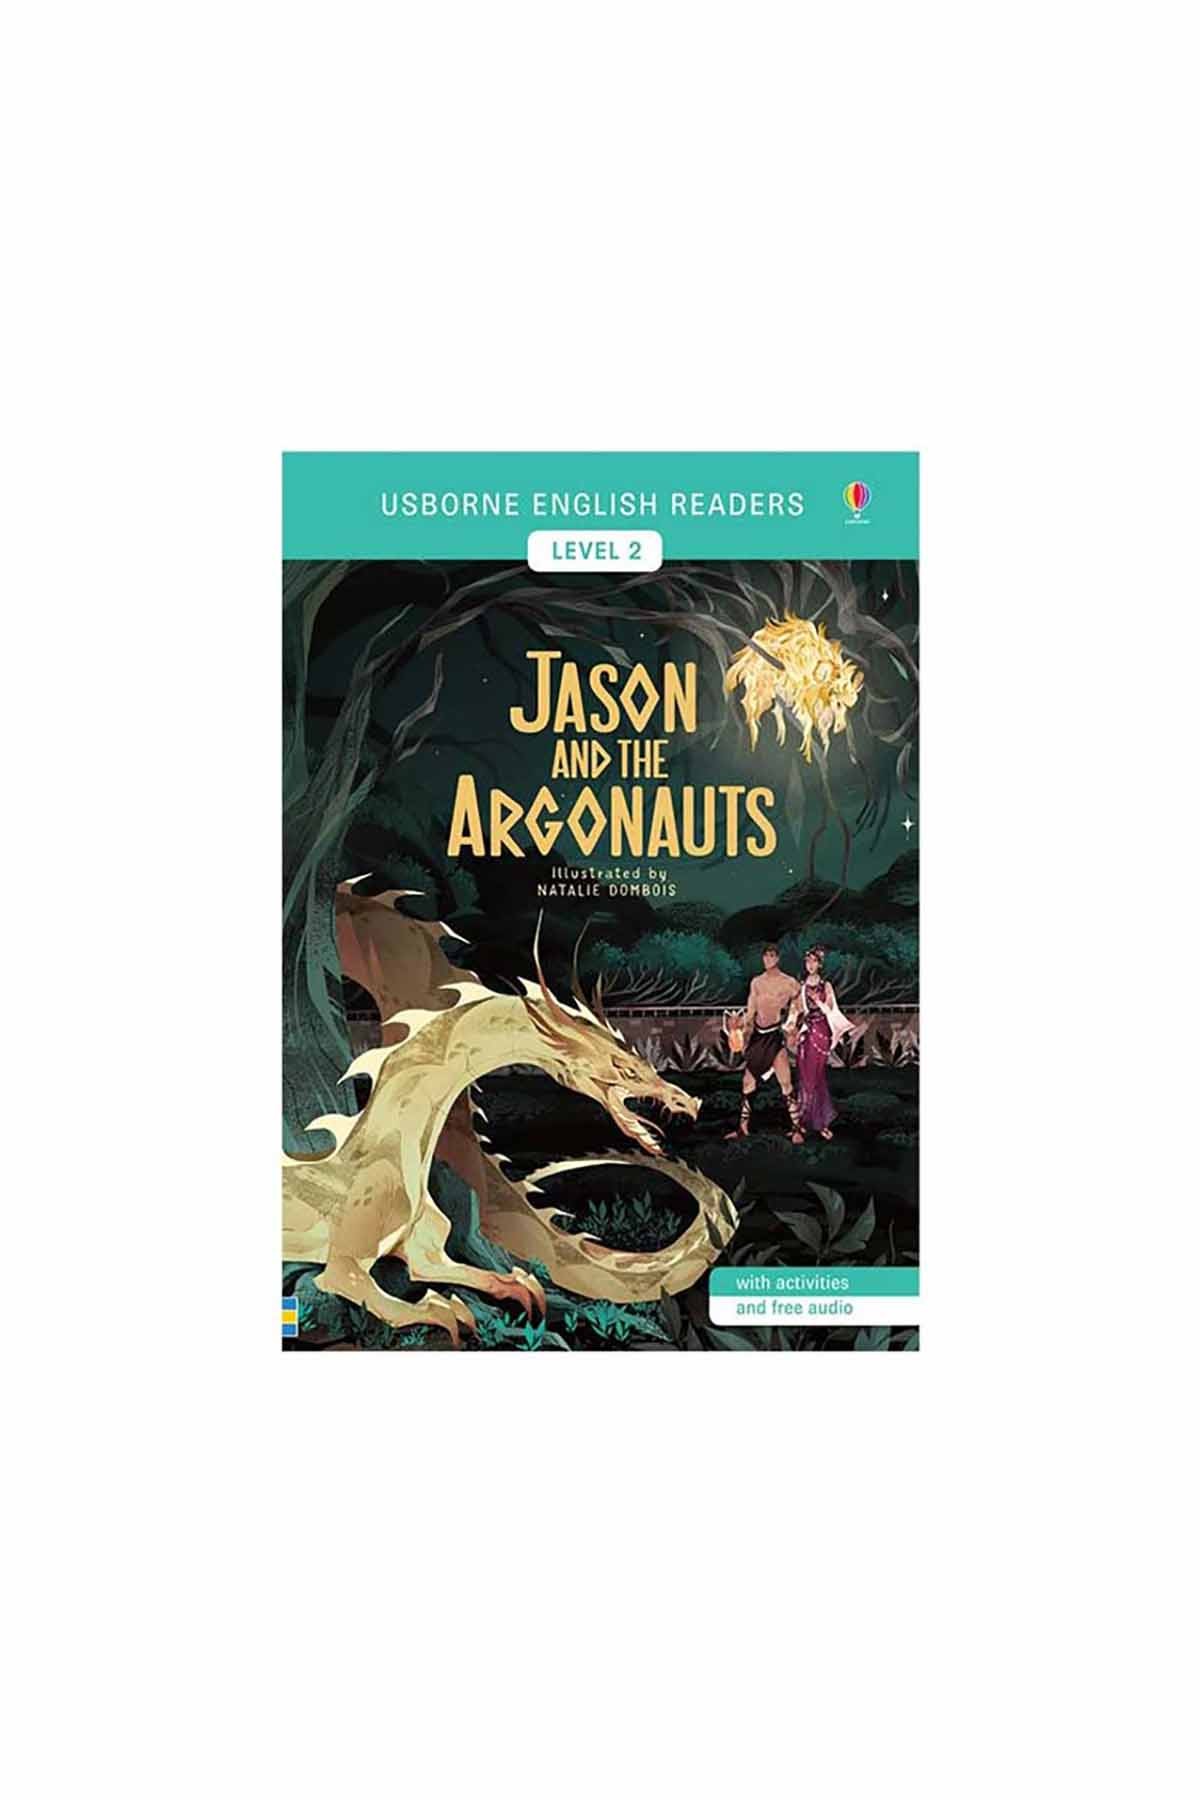 The Usborne Jason and the Argonauts - English Readers Level 2